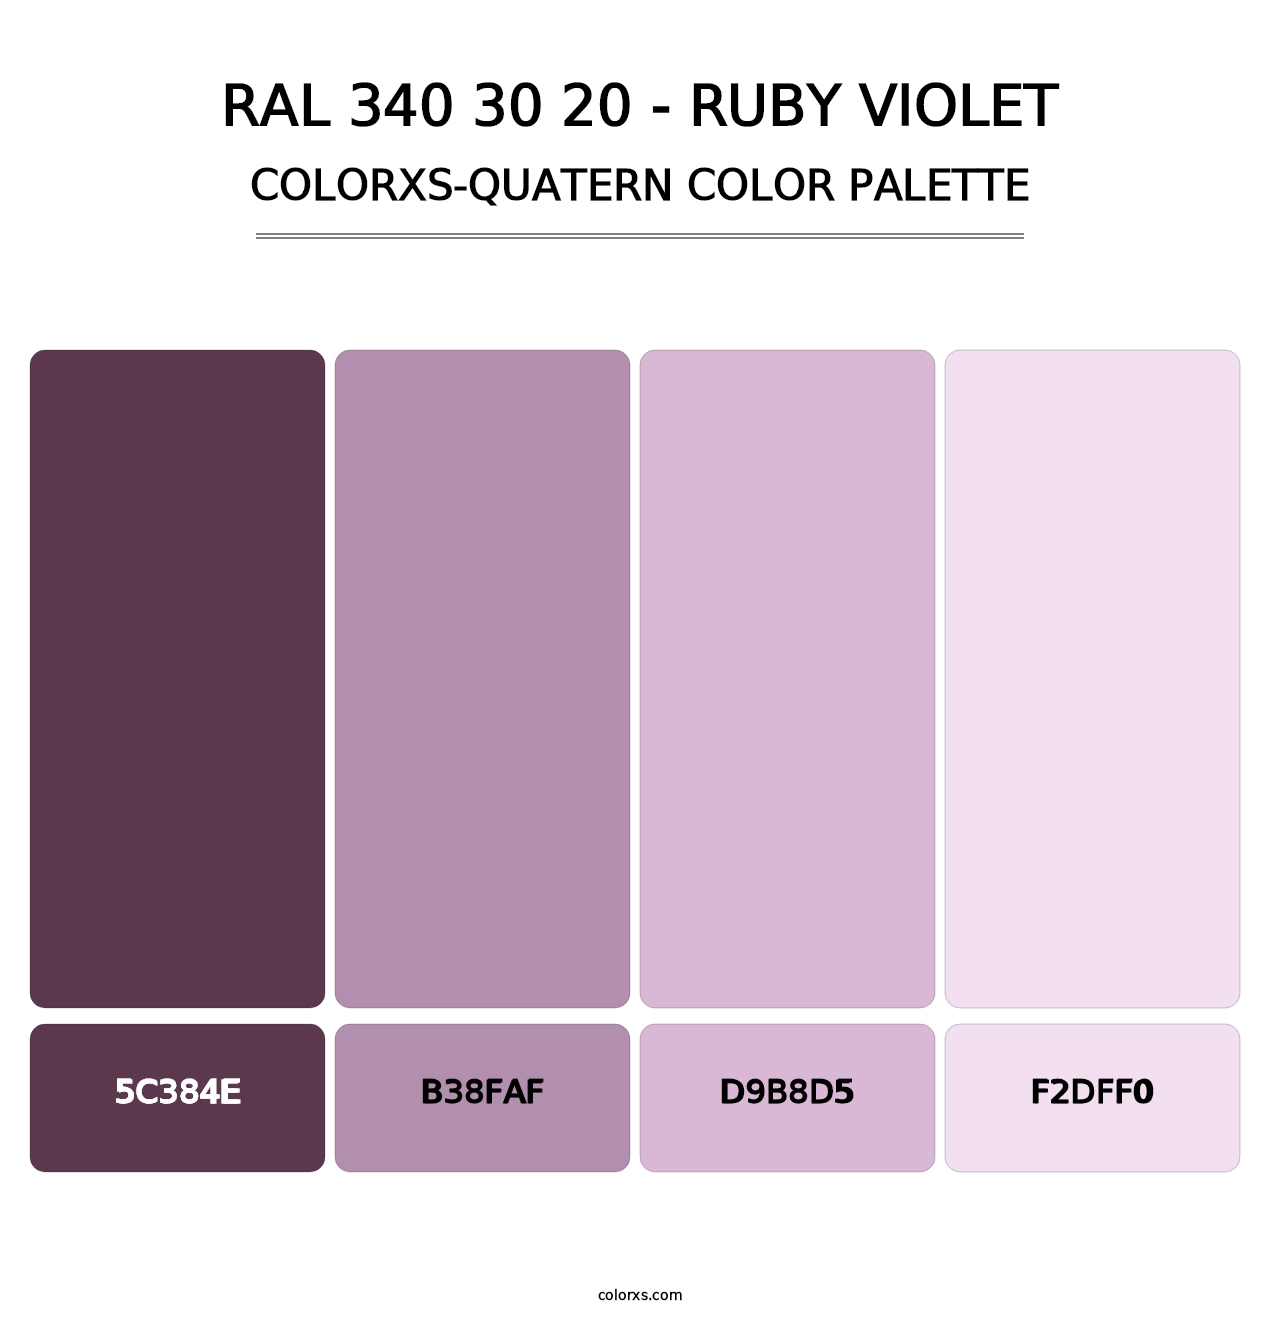 RAL 340 30 20 - Ruby Violet - Colorxs Quatern Palette